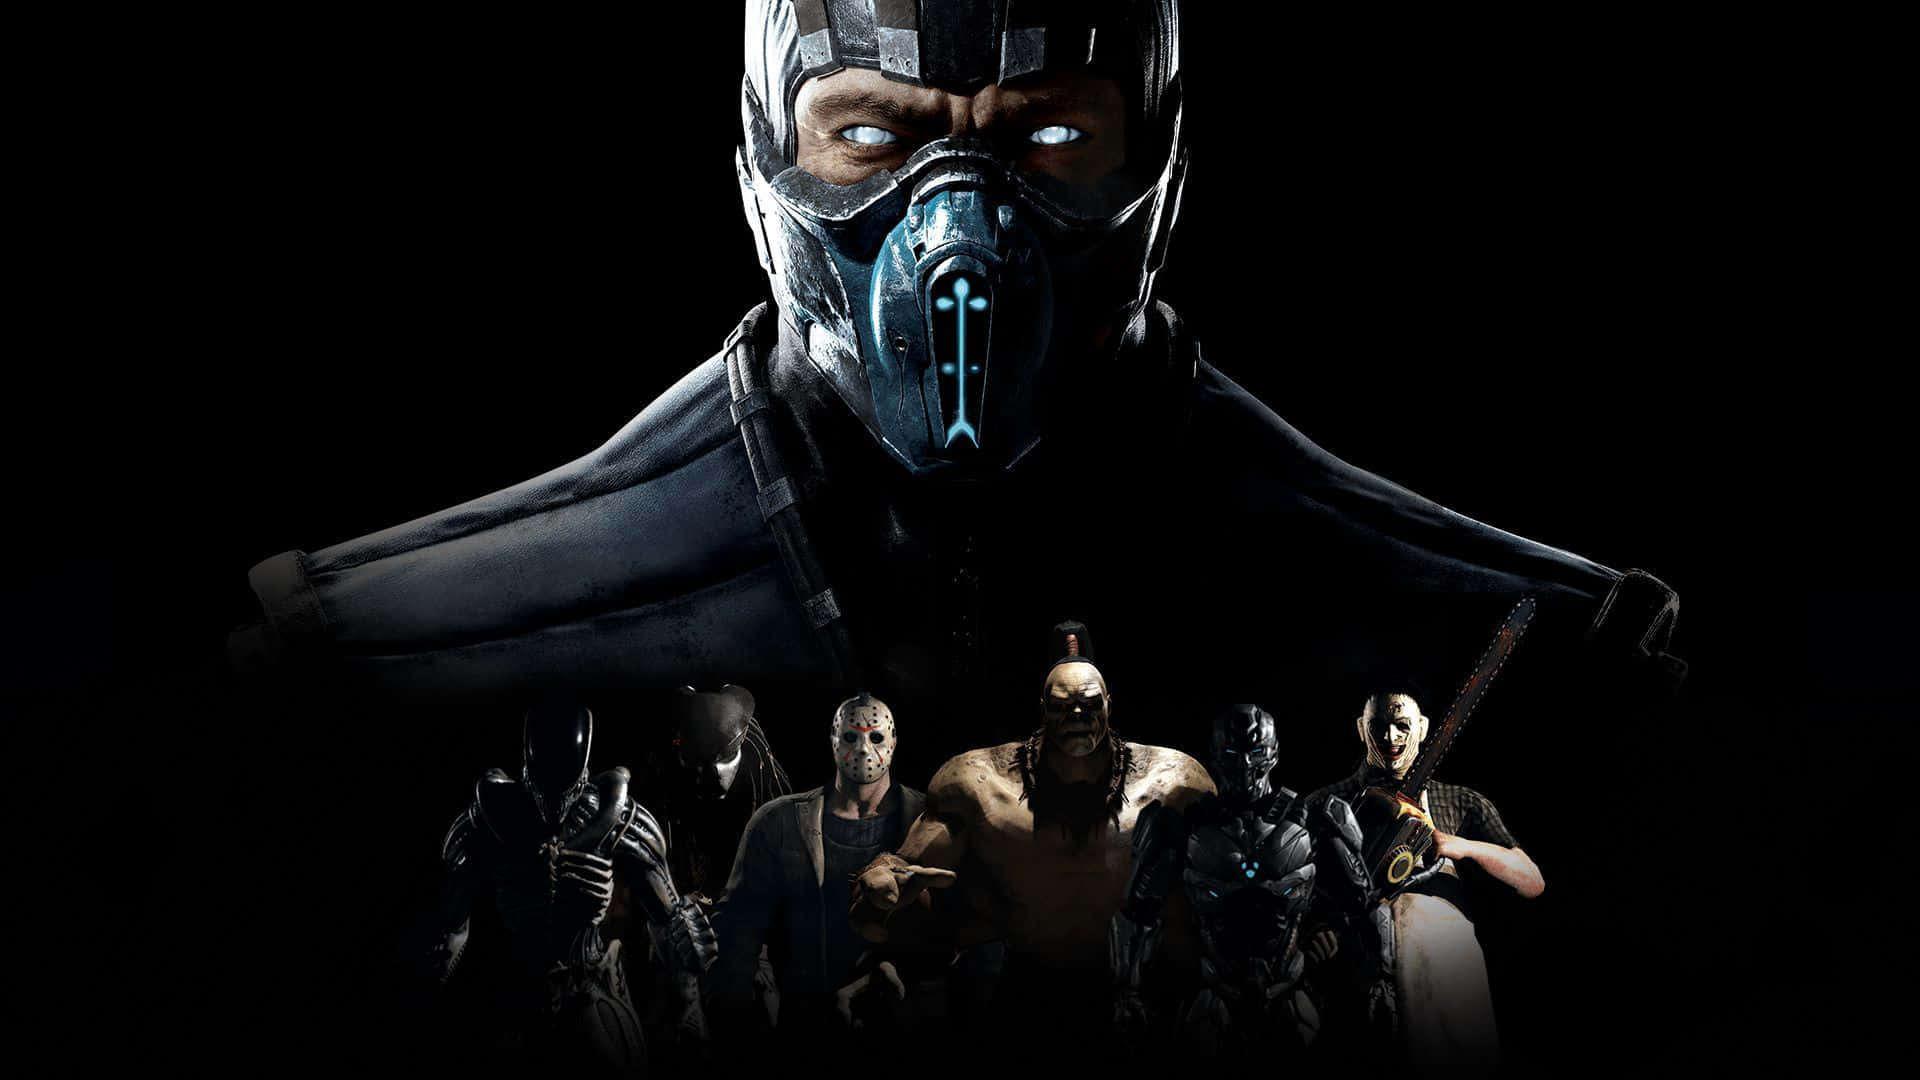 "Experience intense and satisfying Mortal Kombat combat on all platforms." Wallpaper